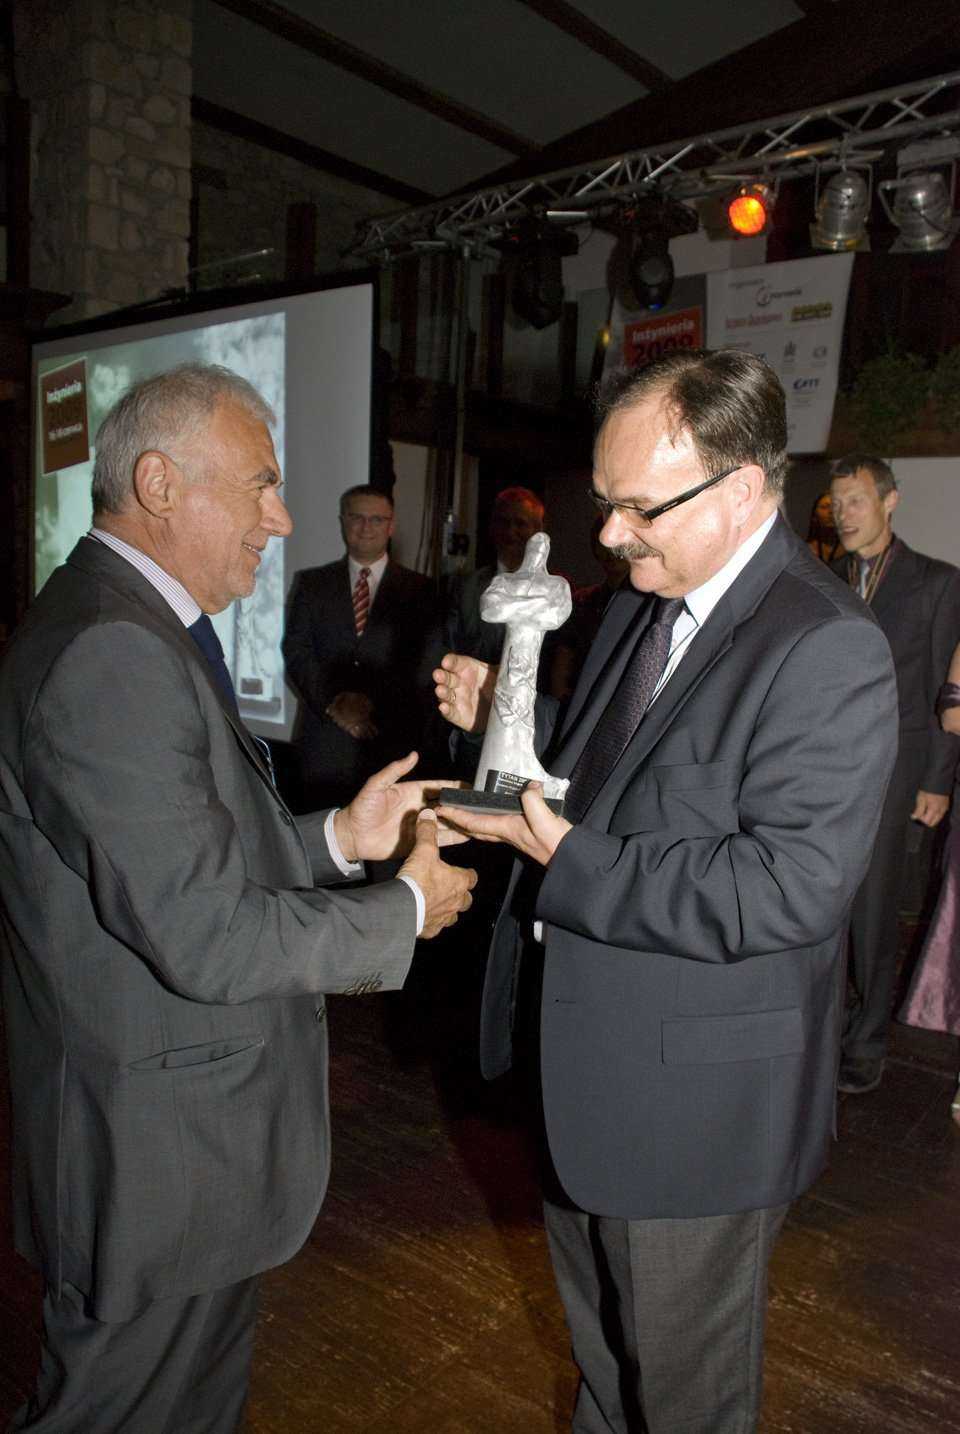 Feliciano Esposto, Anese s.r.l. odbiera nagrodę TYTAN 2009 z rąk dr inż. Karola Ryża